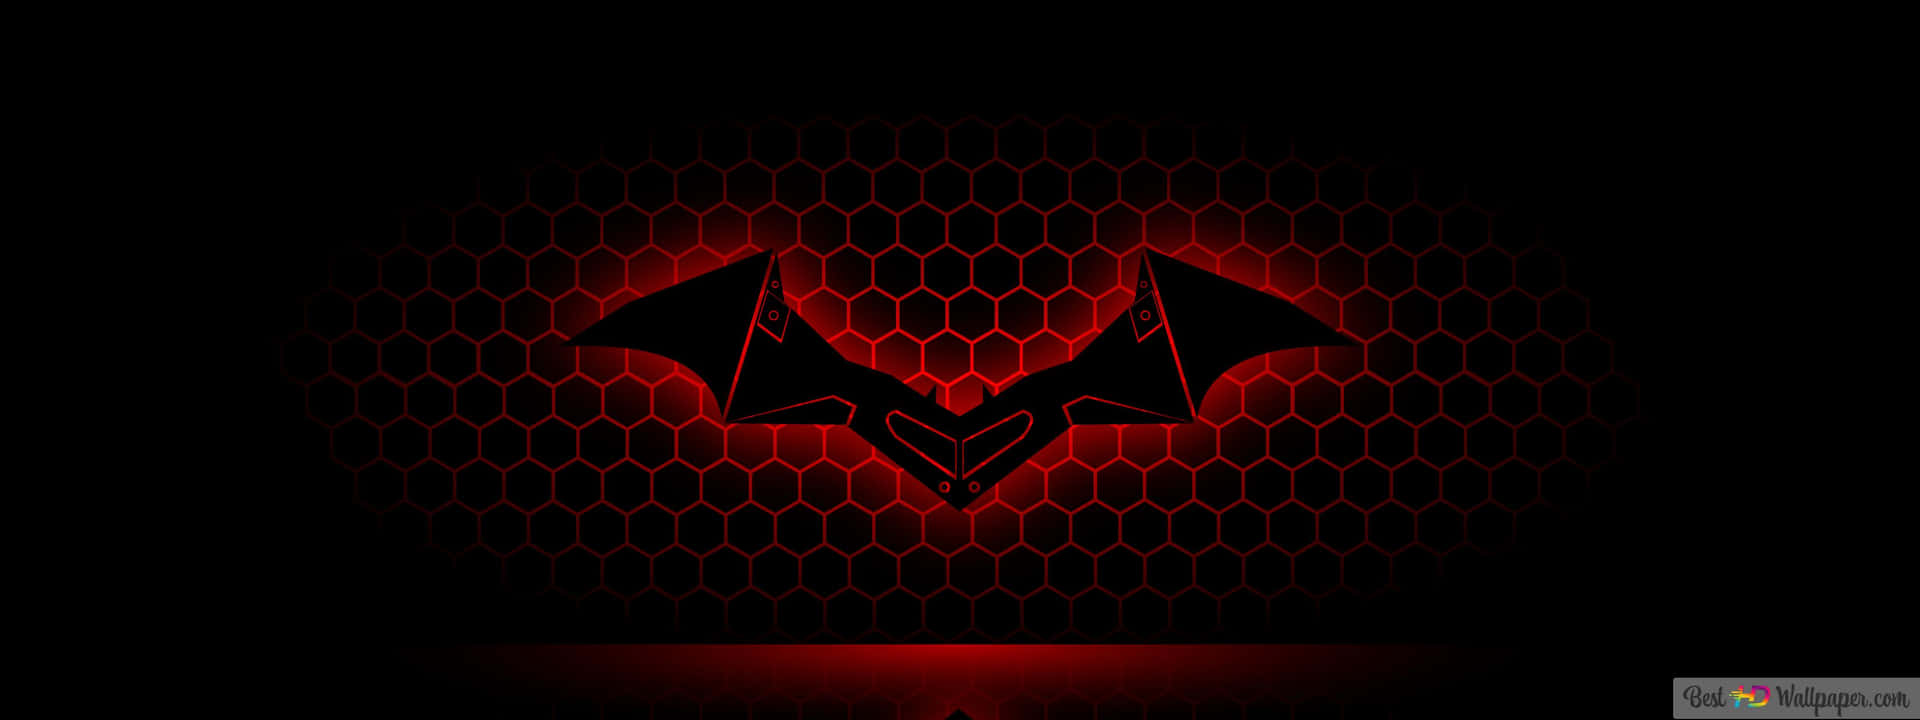 Batman Logo Wallpaper Hd - Wallpapers Wallpaper